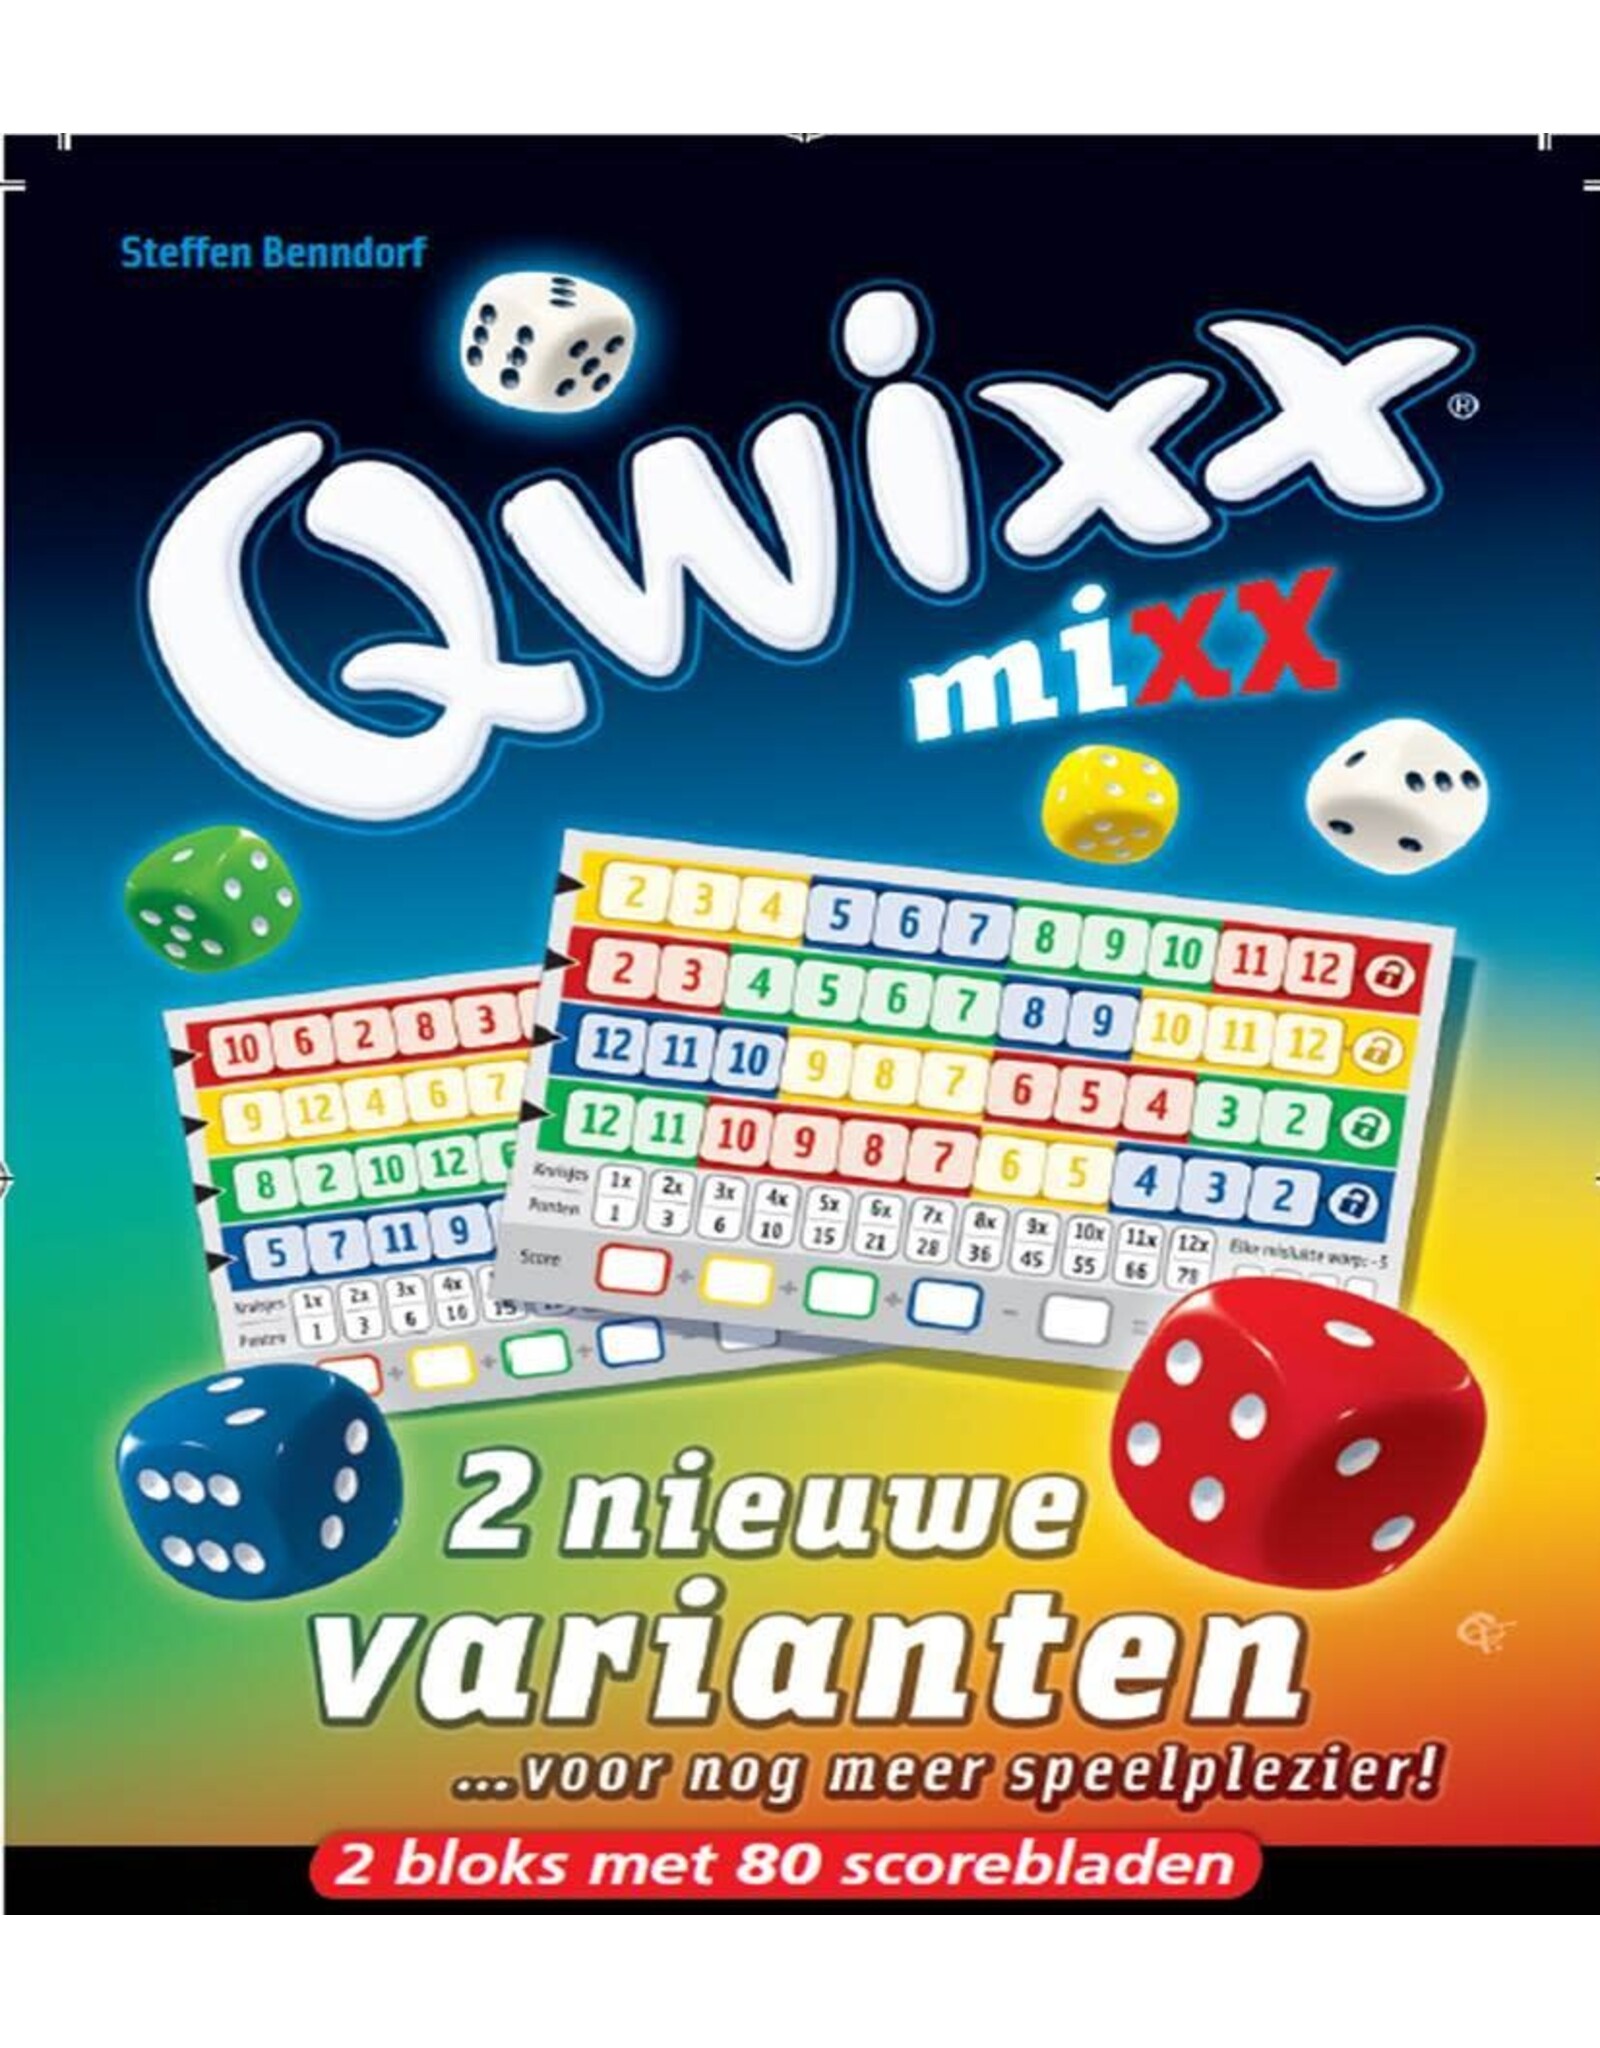 White Goblin Games Qwixx Mixx